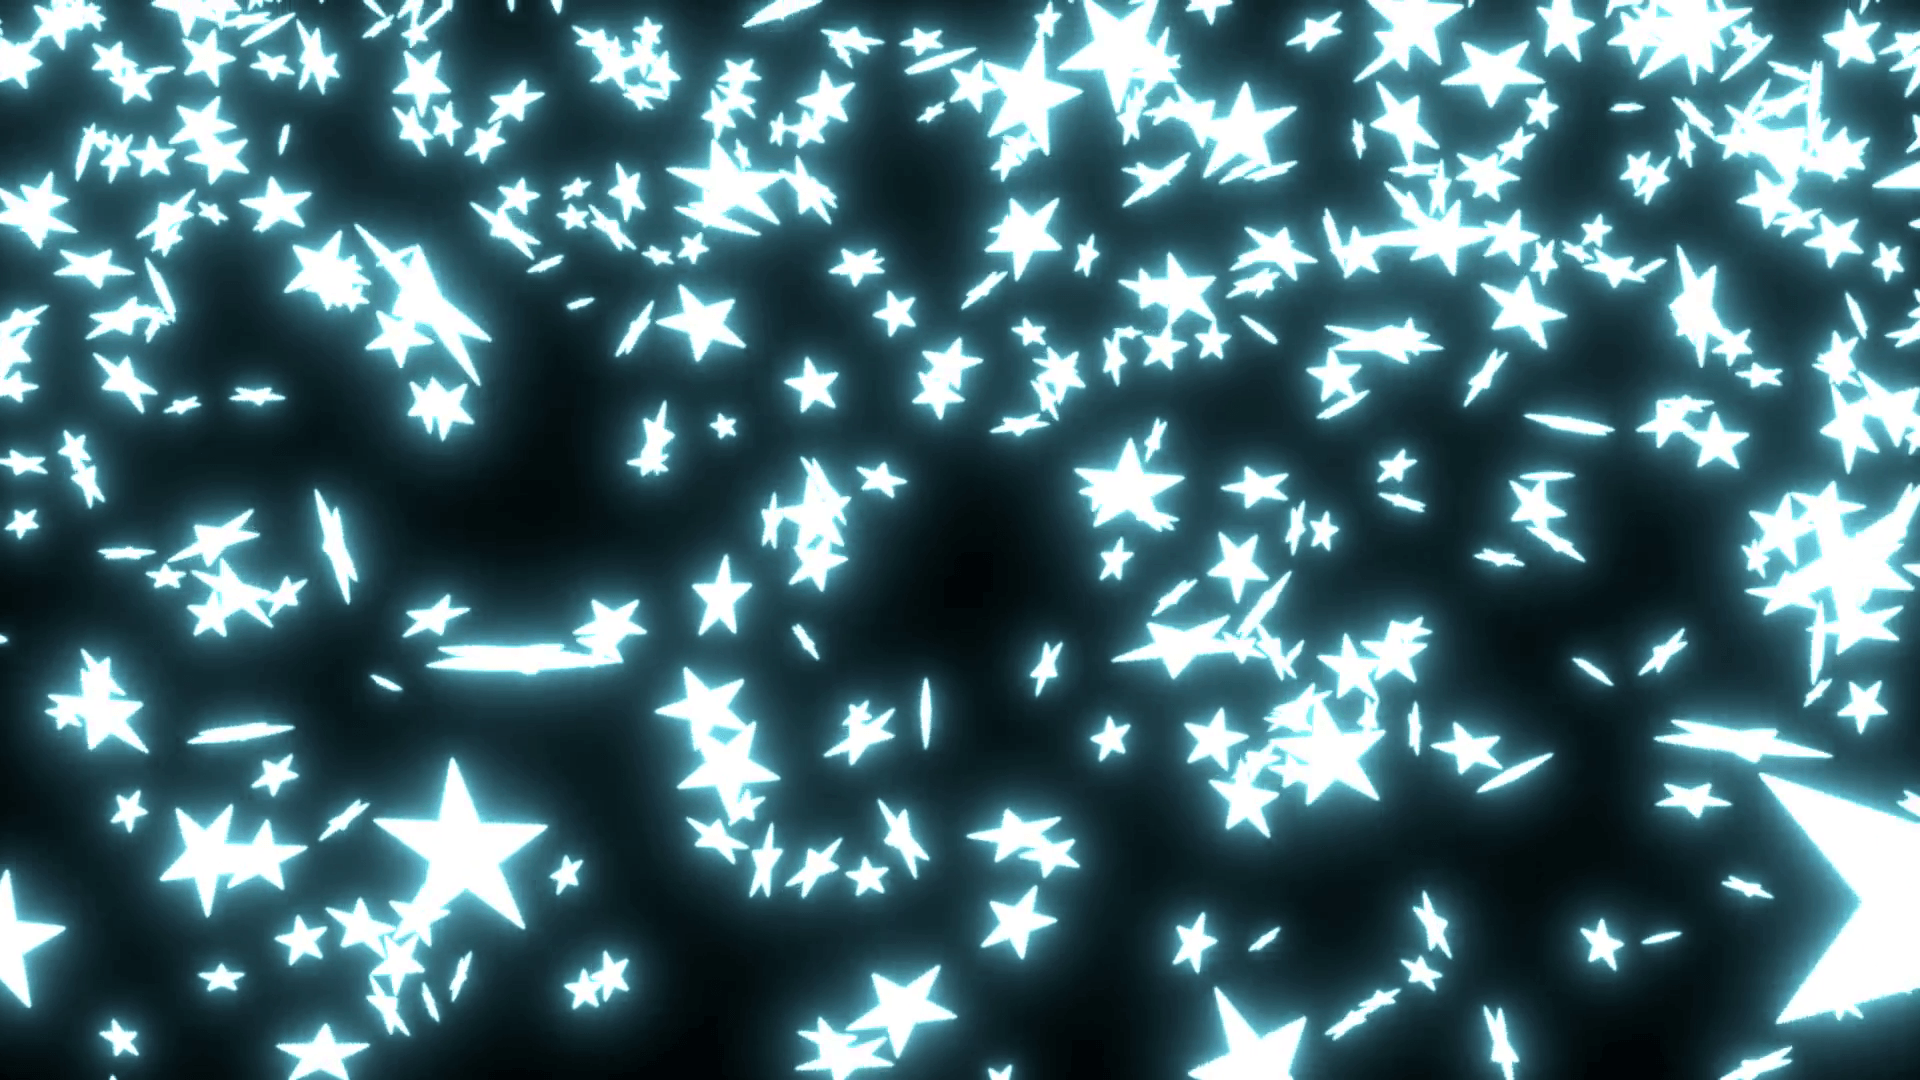 Animated falling neon light blue stars on black background. Motion